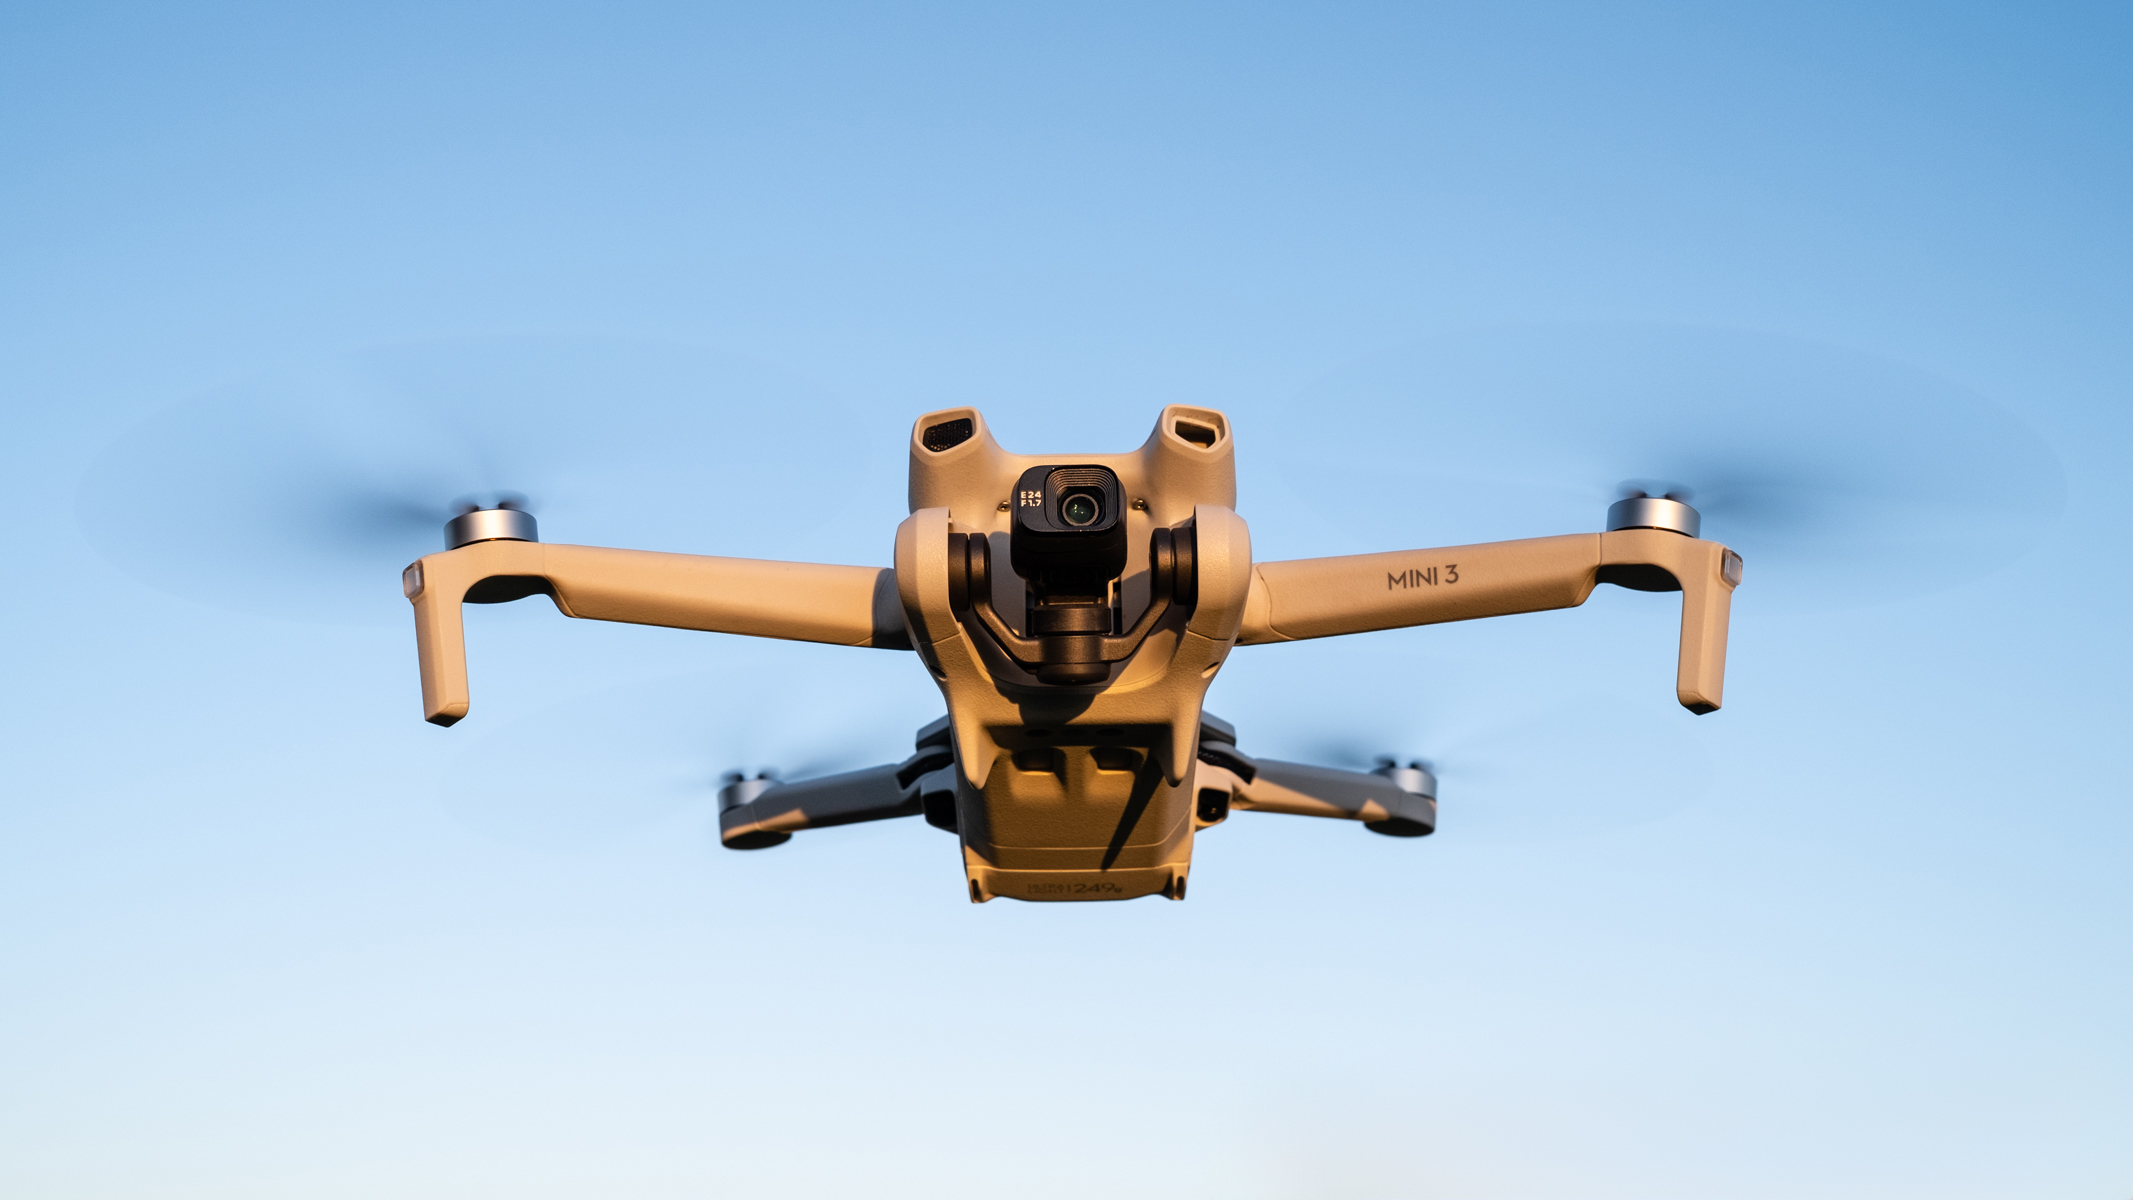 Should I buy a cheap beginner drone to build my flight skills?